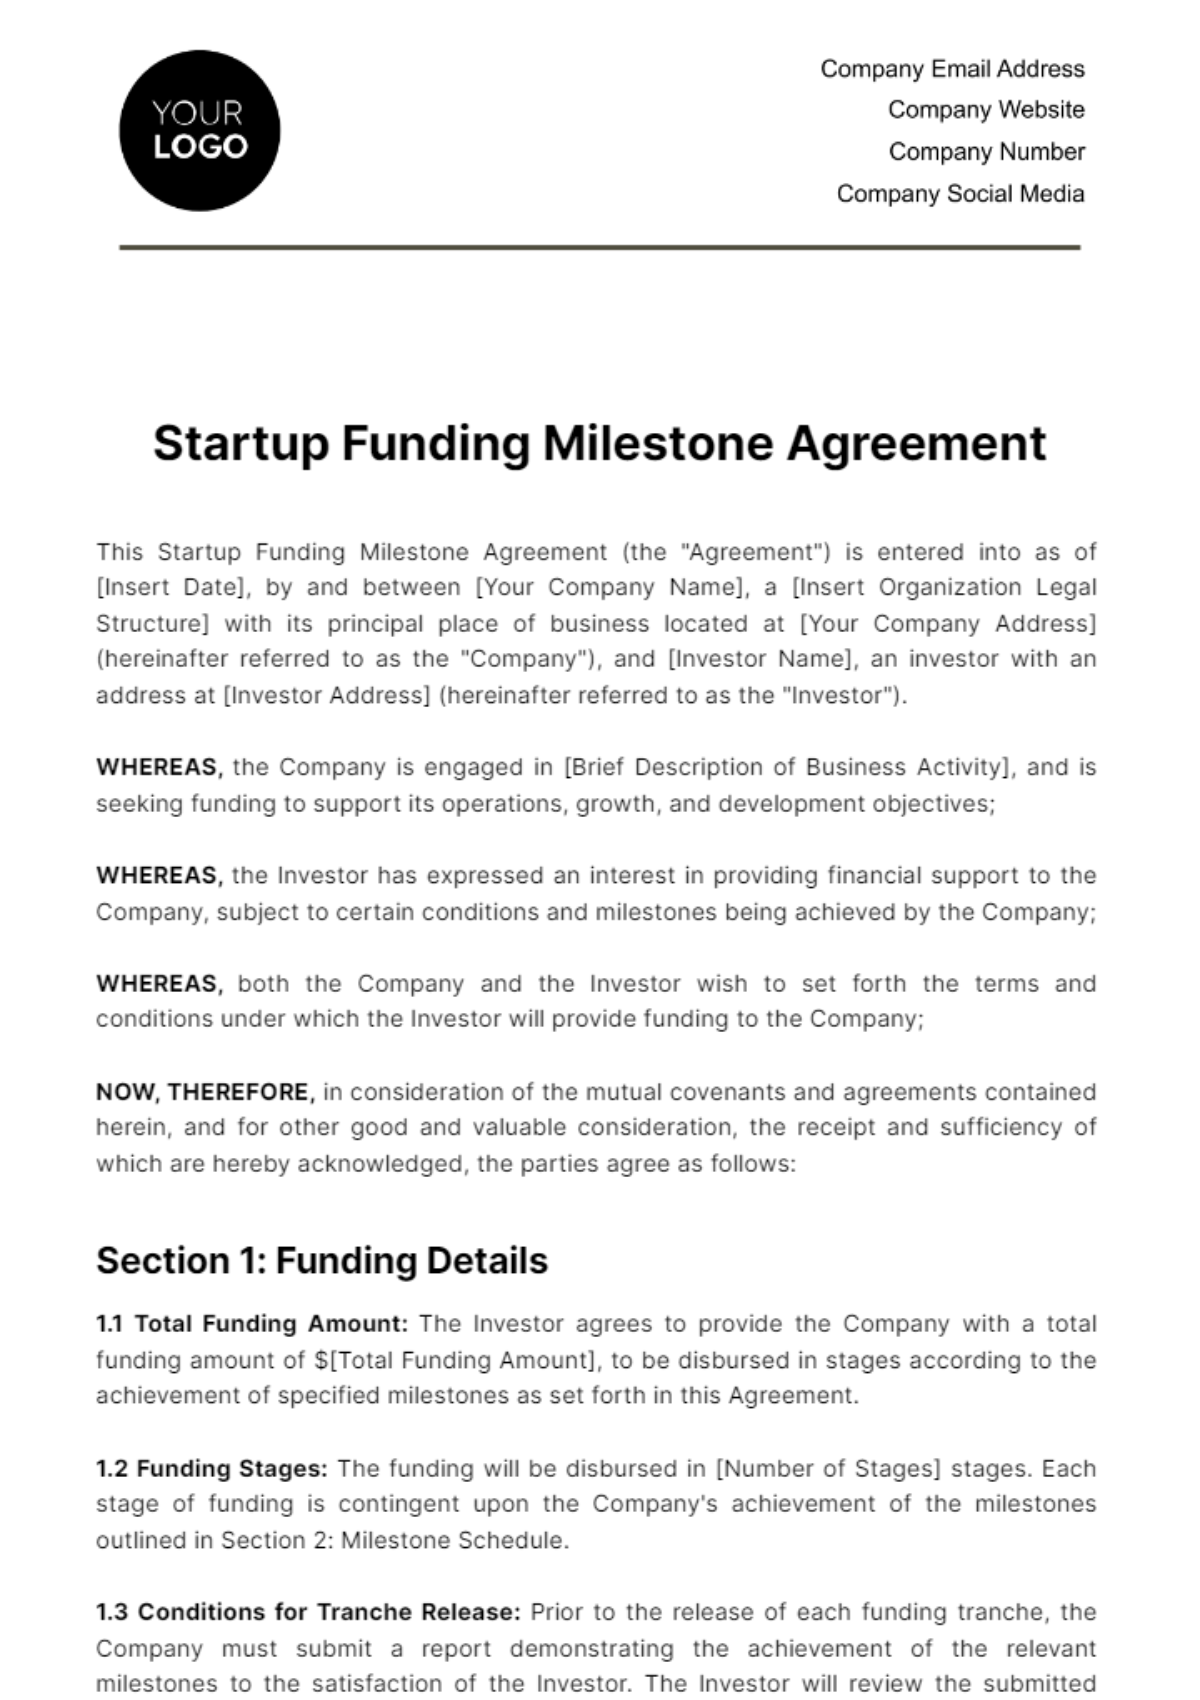 Free Startup Funding Milestone Agreement Template